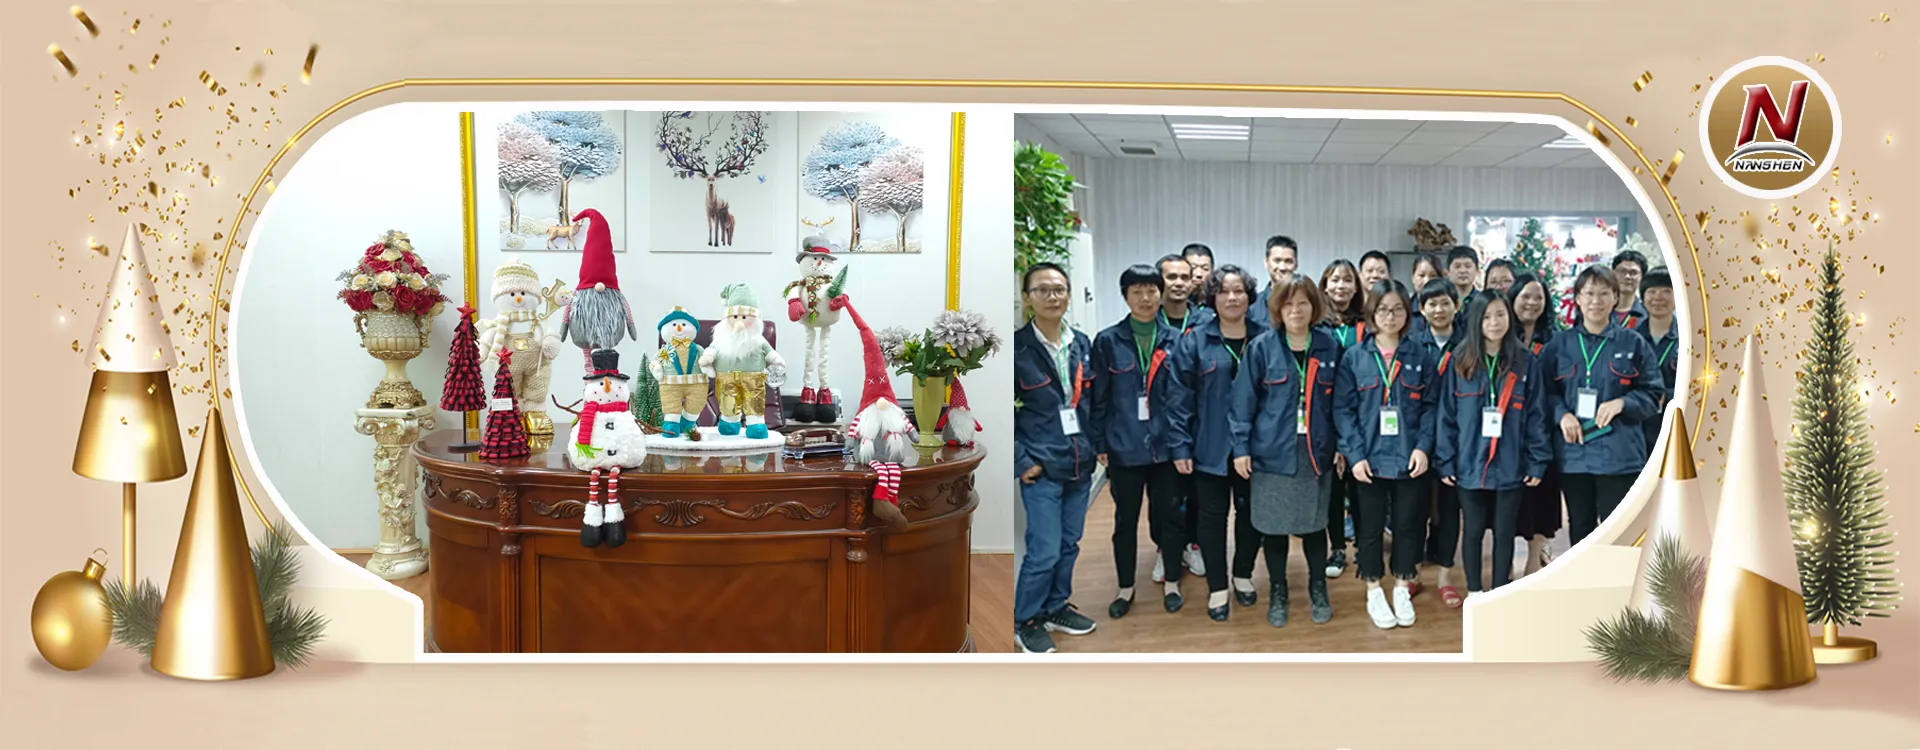 Nanshen Crafts Industry Co.، Ltd.